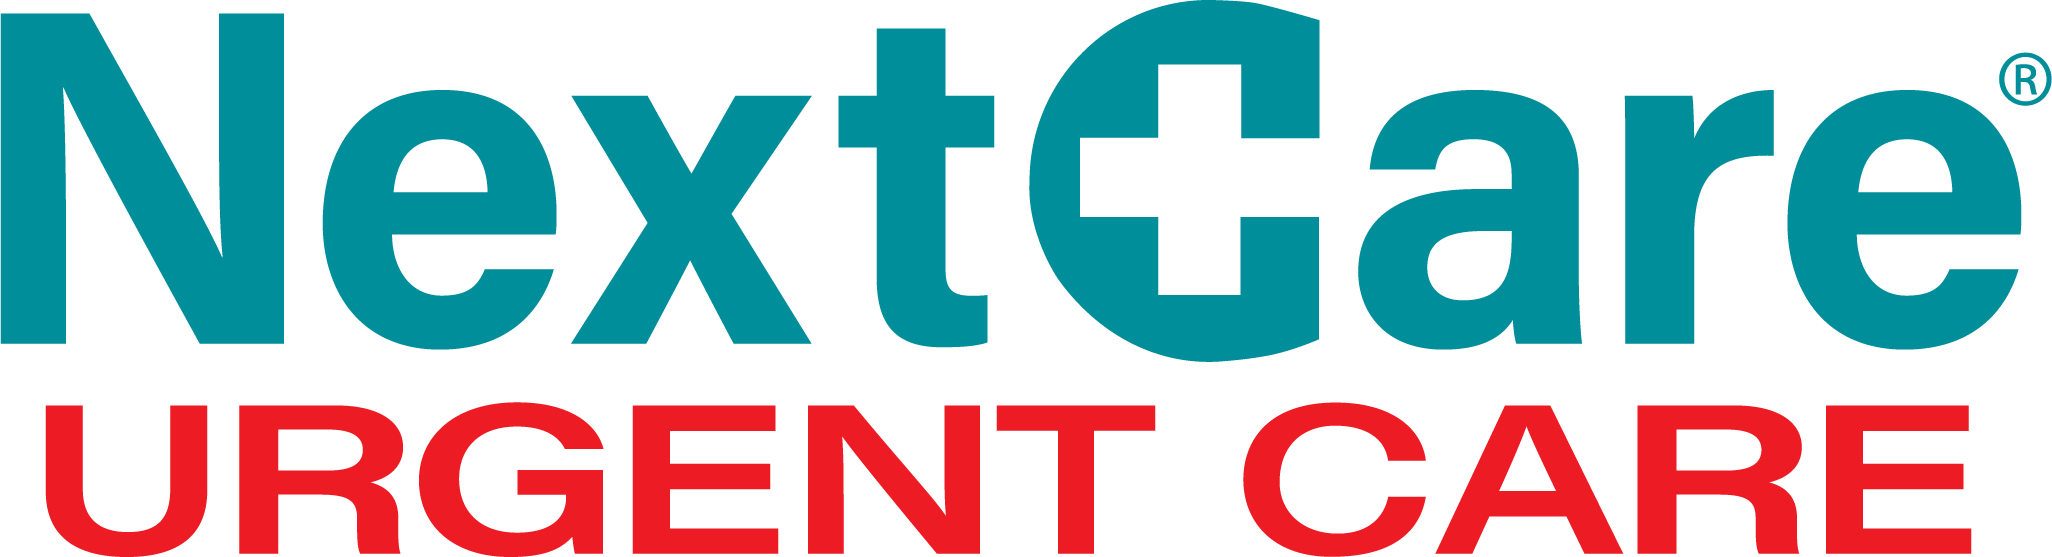 NextCare Urgent Care - Petroglyph Logo